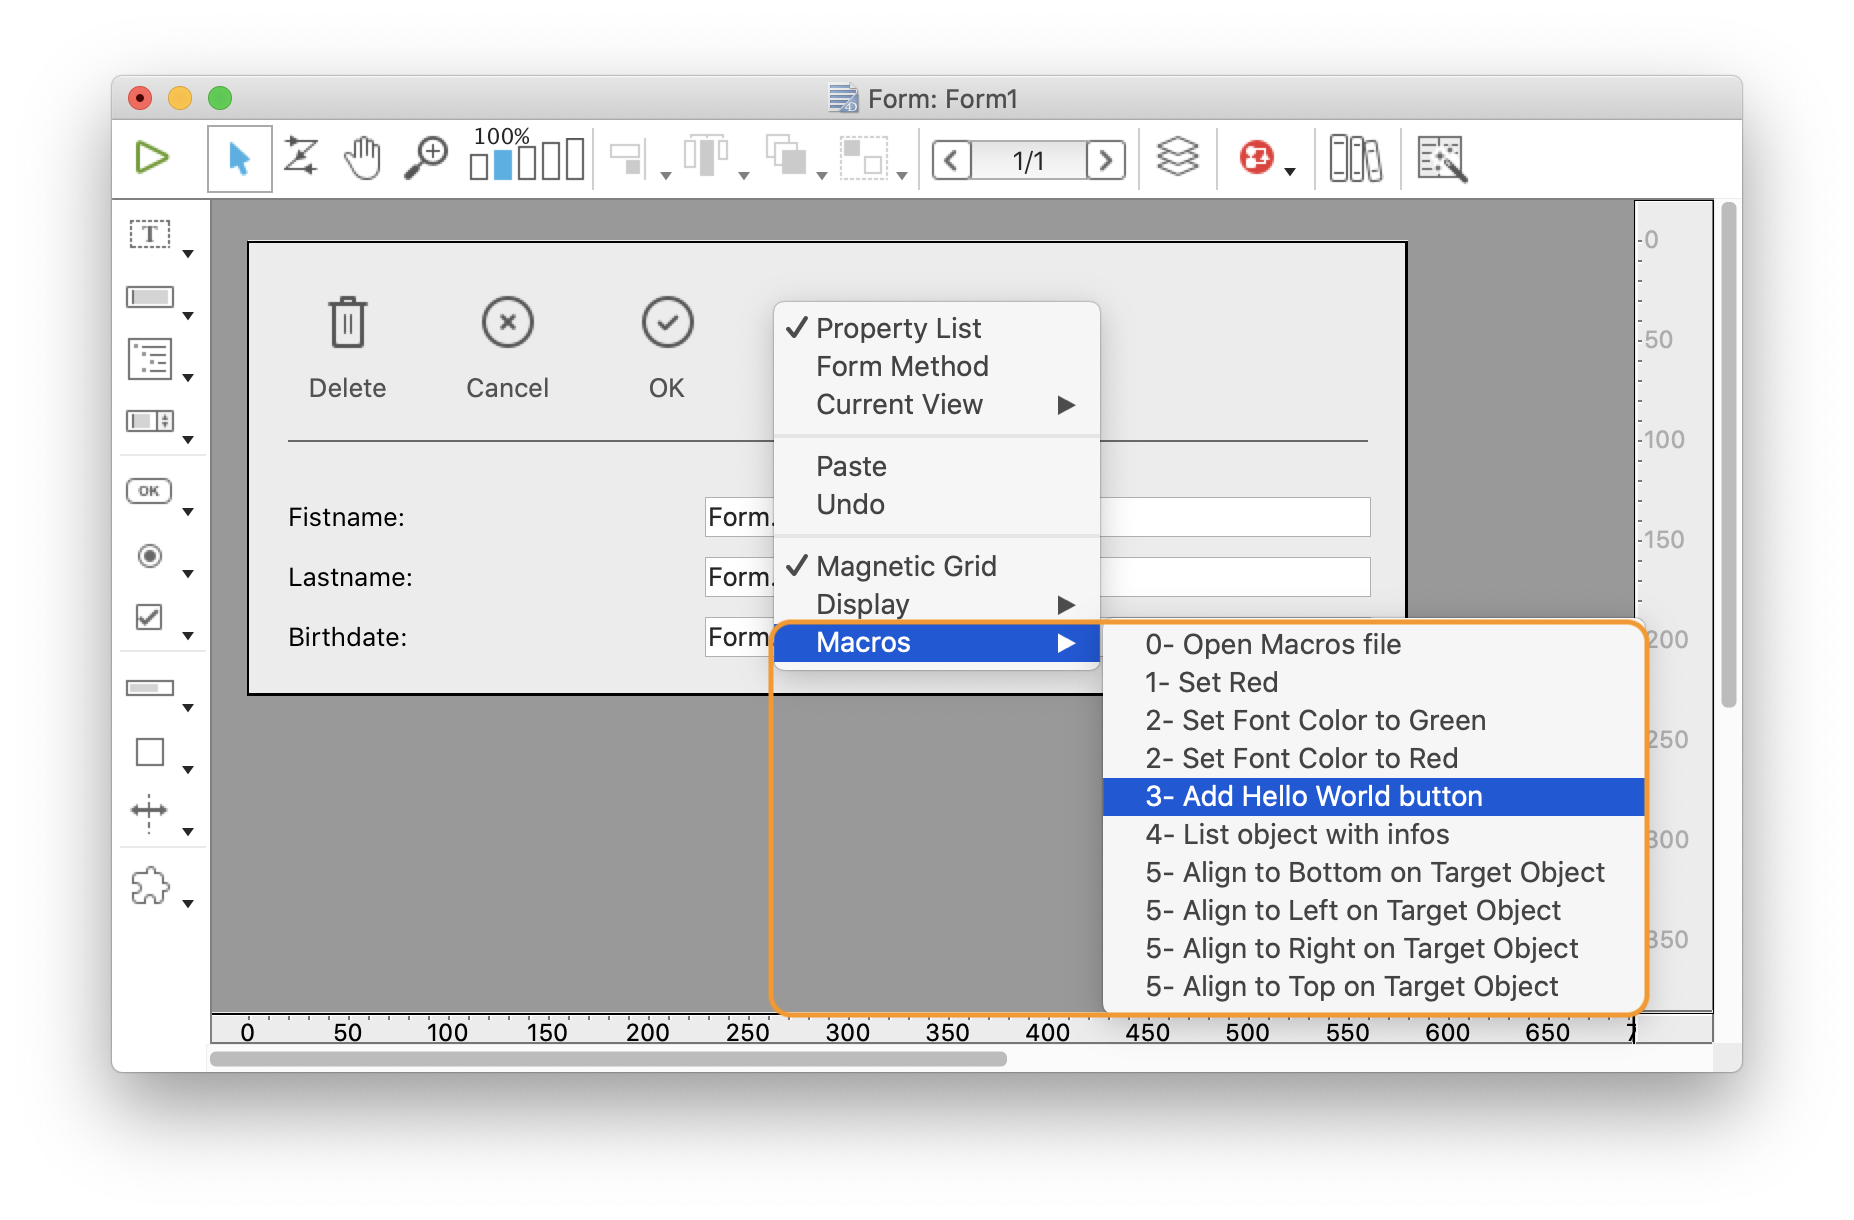 Show the macro contextual menu in the form editor